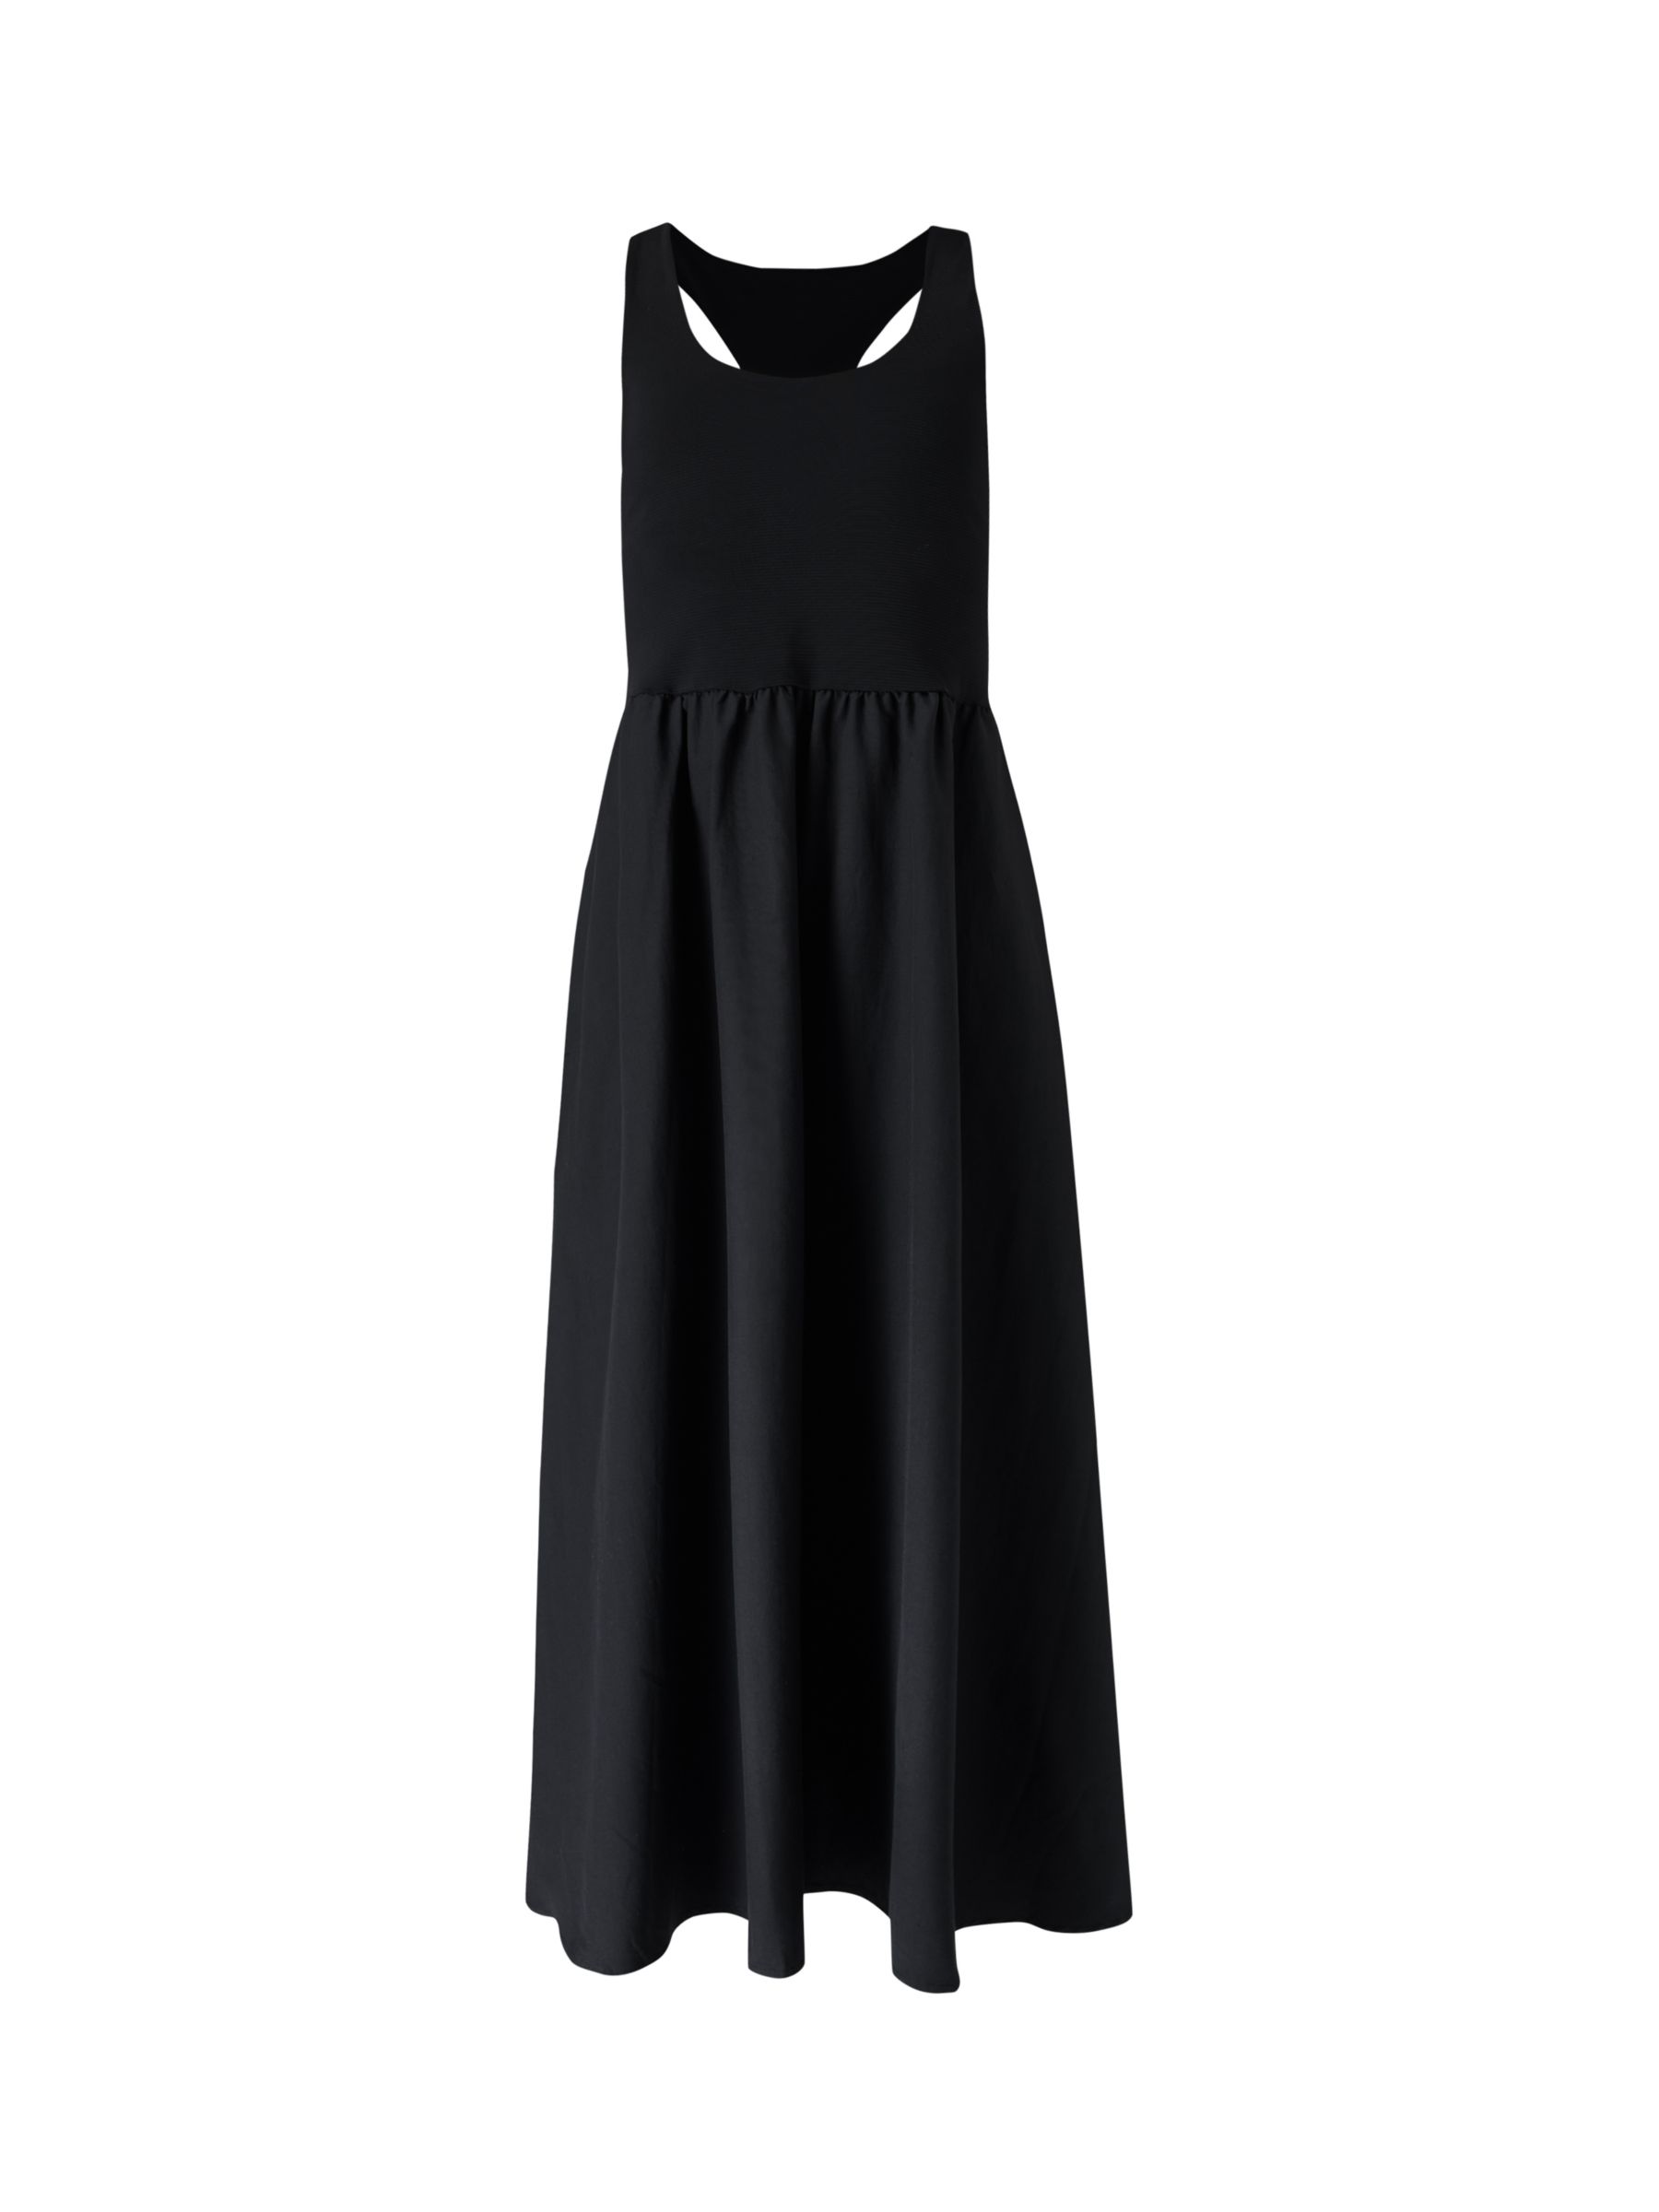 Sweaty Betty Explorer Ribbed Race Dress, Black at John Lewis & Partners